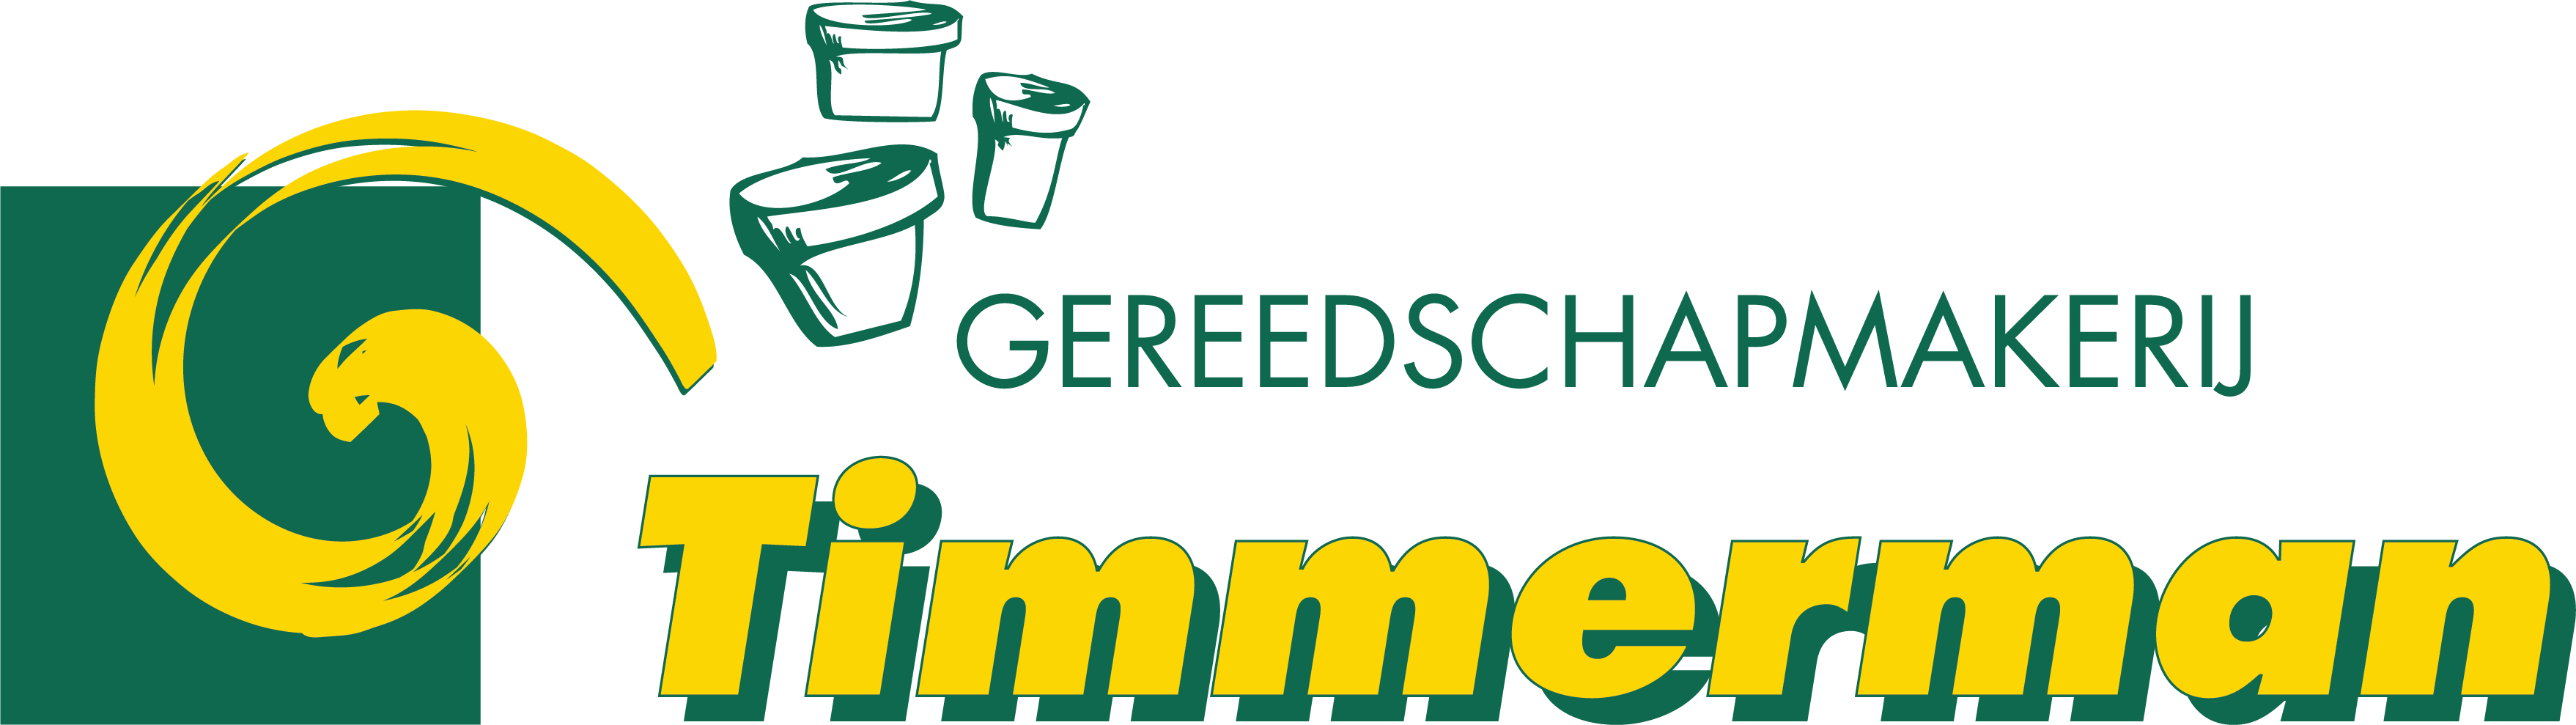 Timmerman-logo